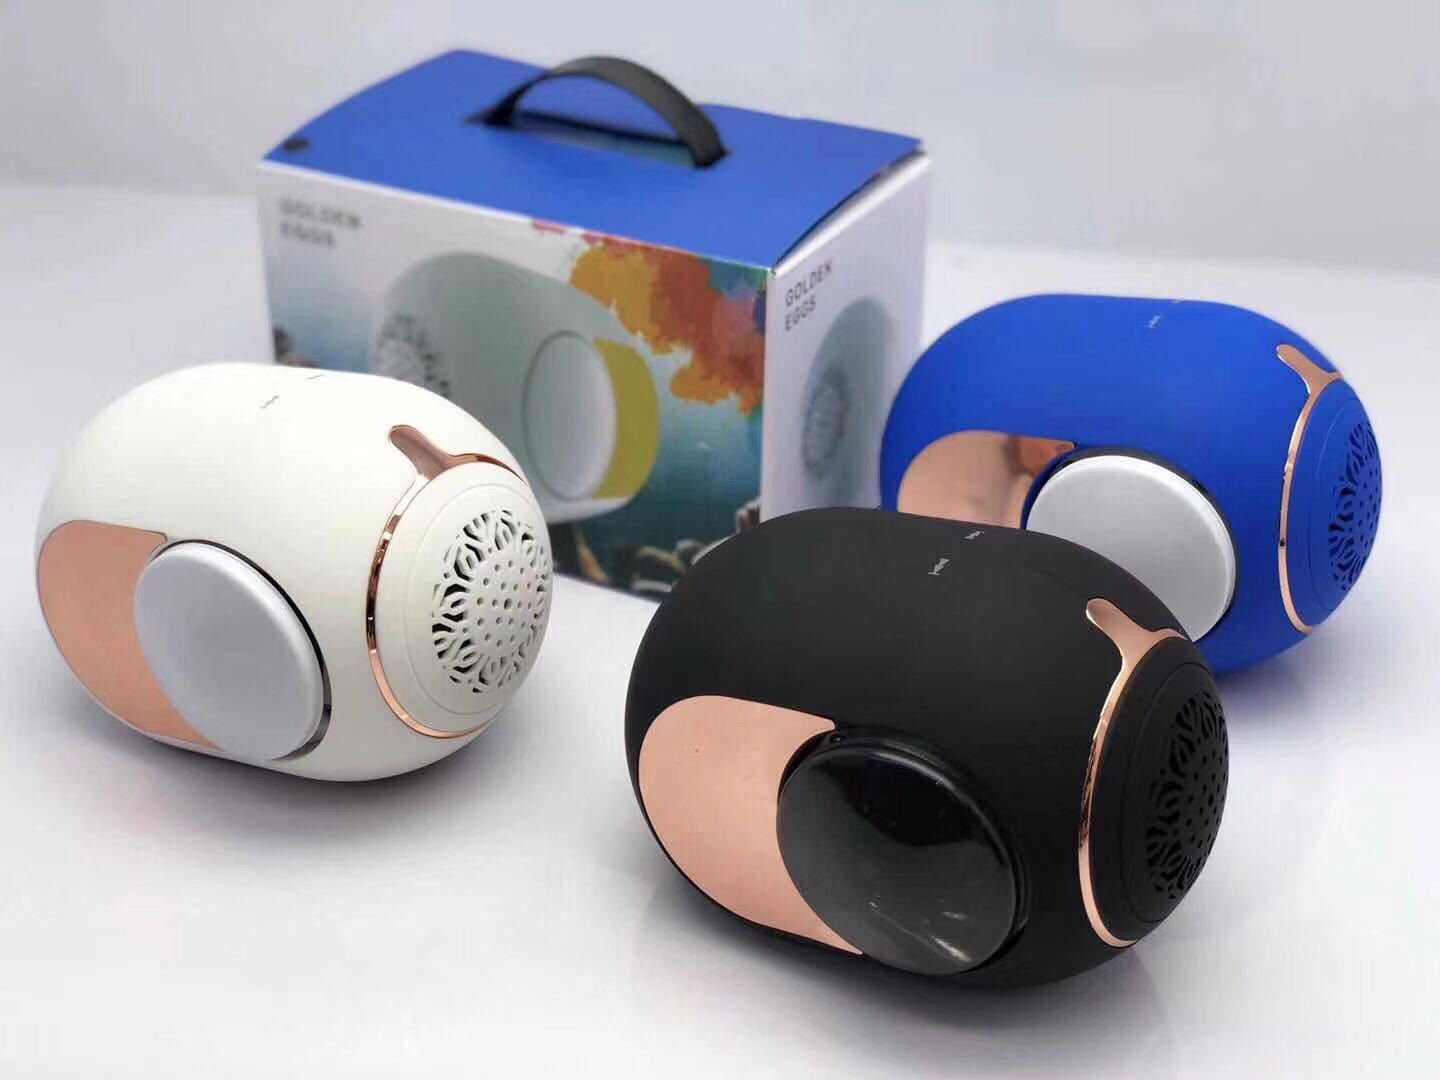 Small golden egg wireless bluetooth speaker